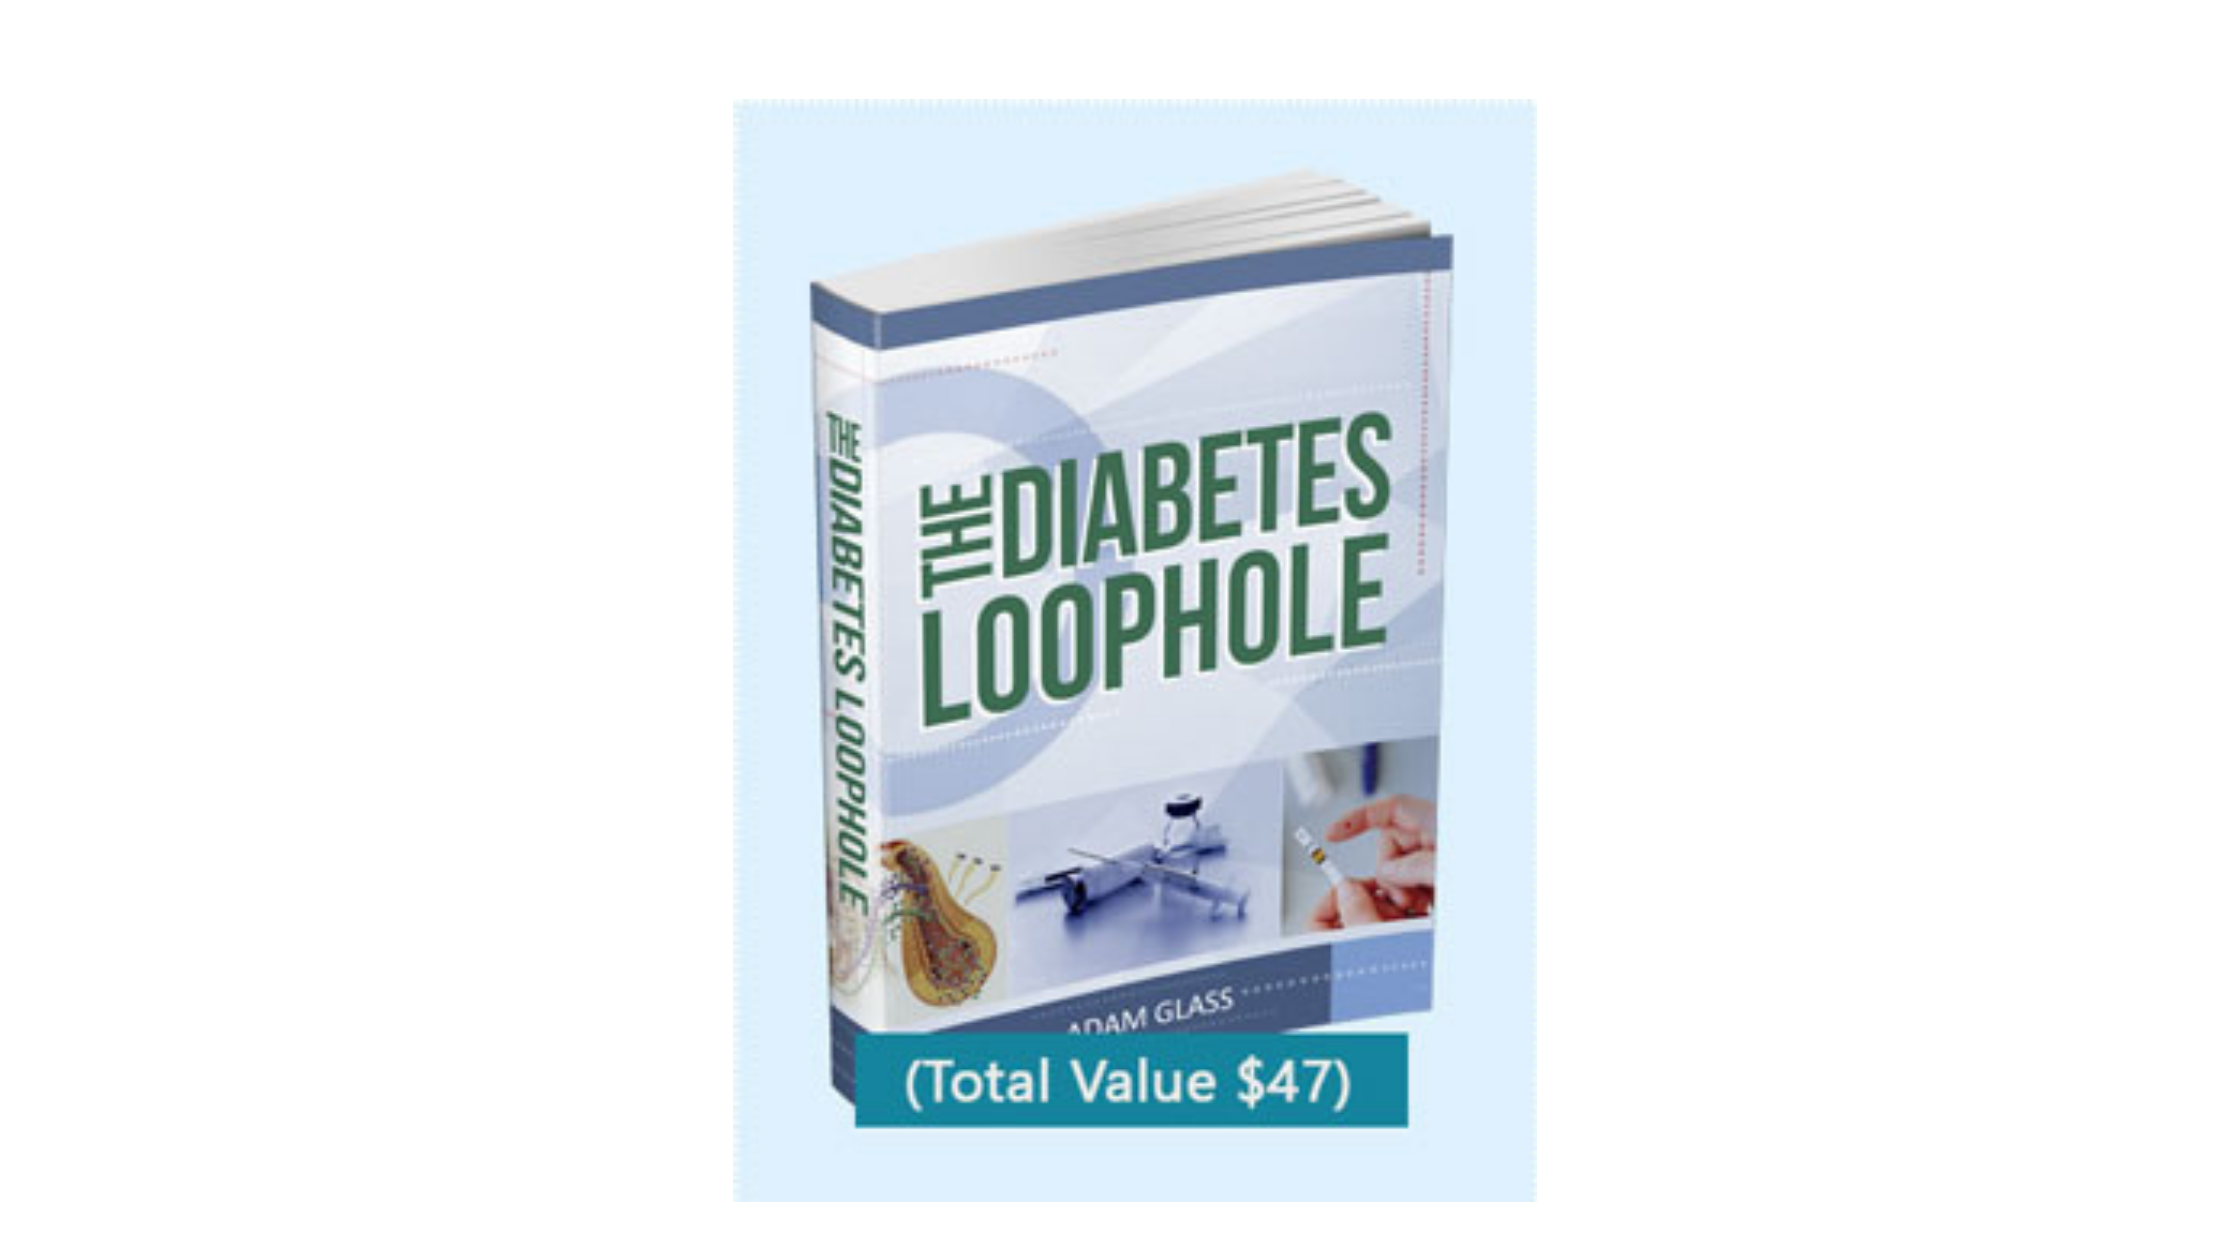 Cardio Clear 7 Bonus The Diabetes Loophole Ebook